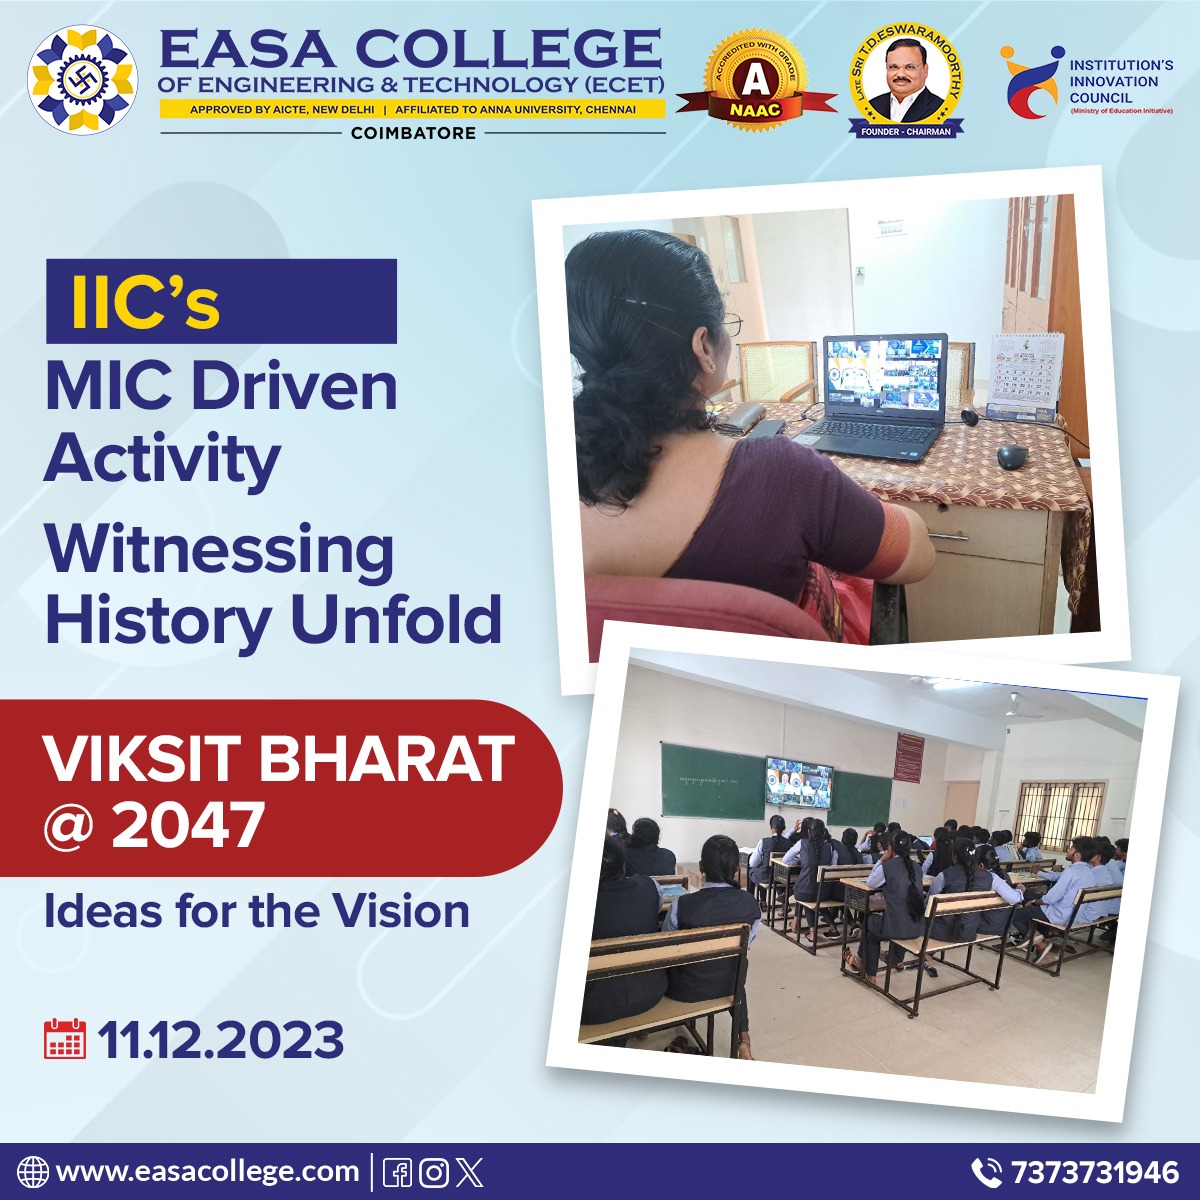 MIC-Driven Educational Session Witnessing VIKSIT BHARAT @ 2047!